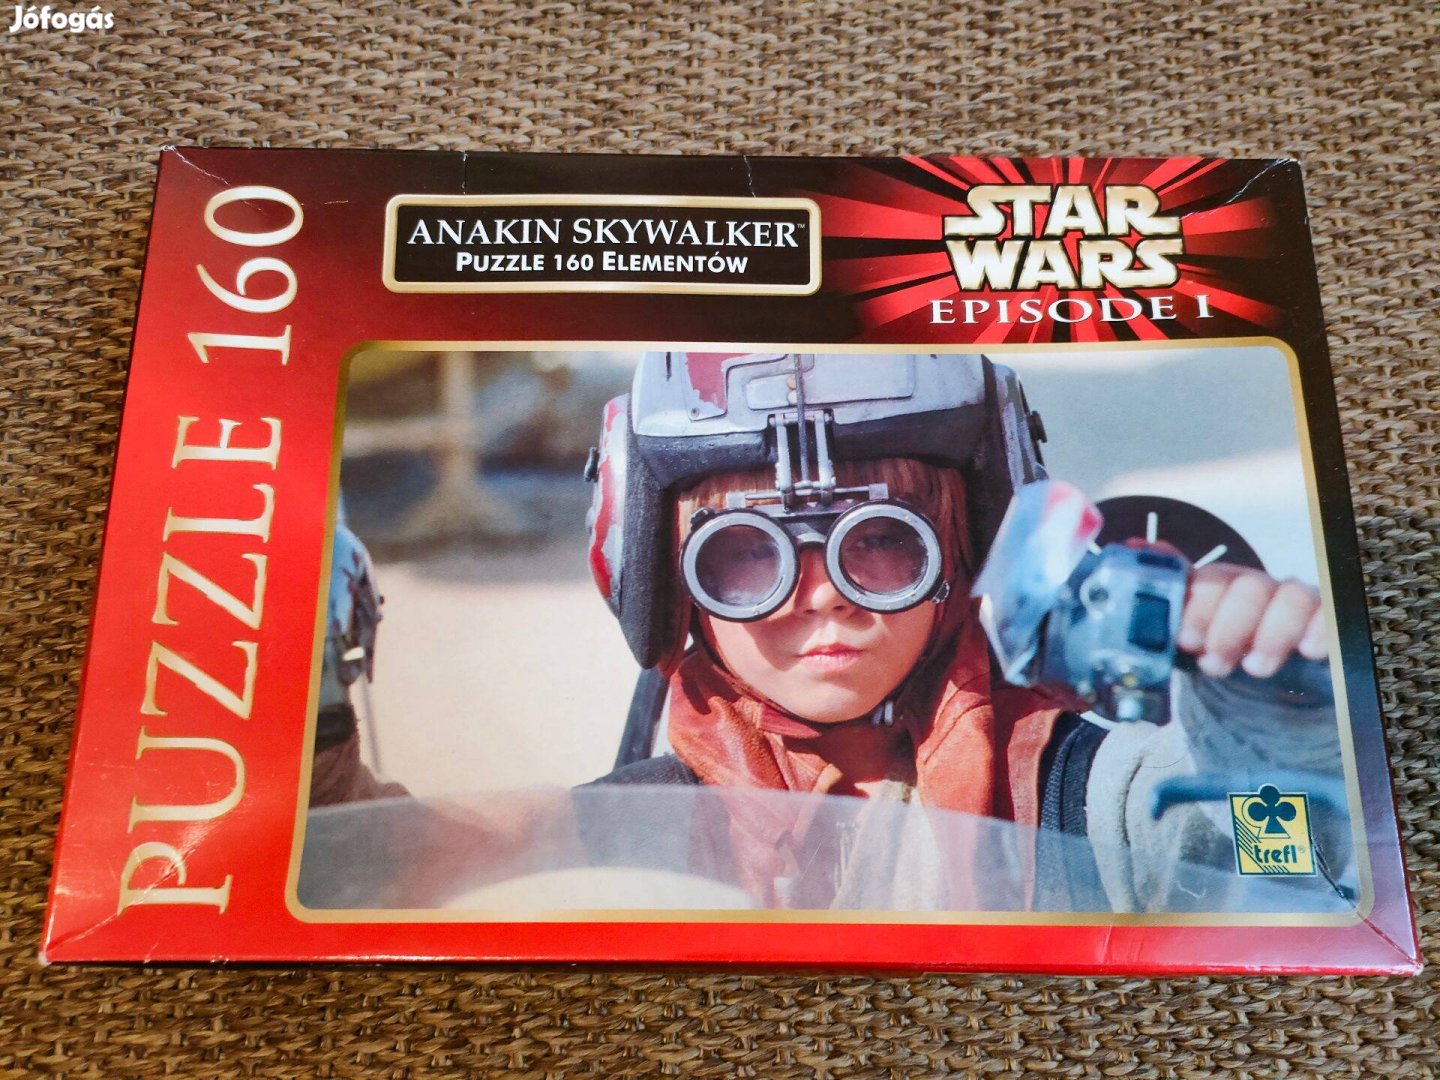 Star Wars puzzle 160 - Baljós árnyak, Anakin Skywalker 15088 40cm*27cm